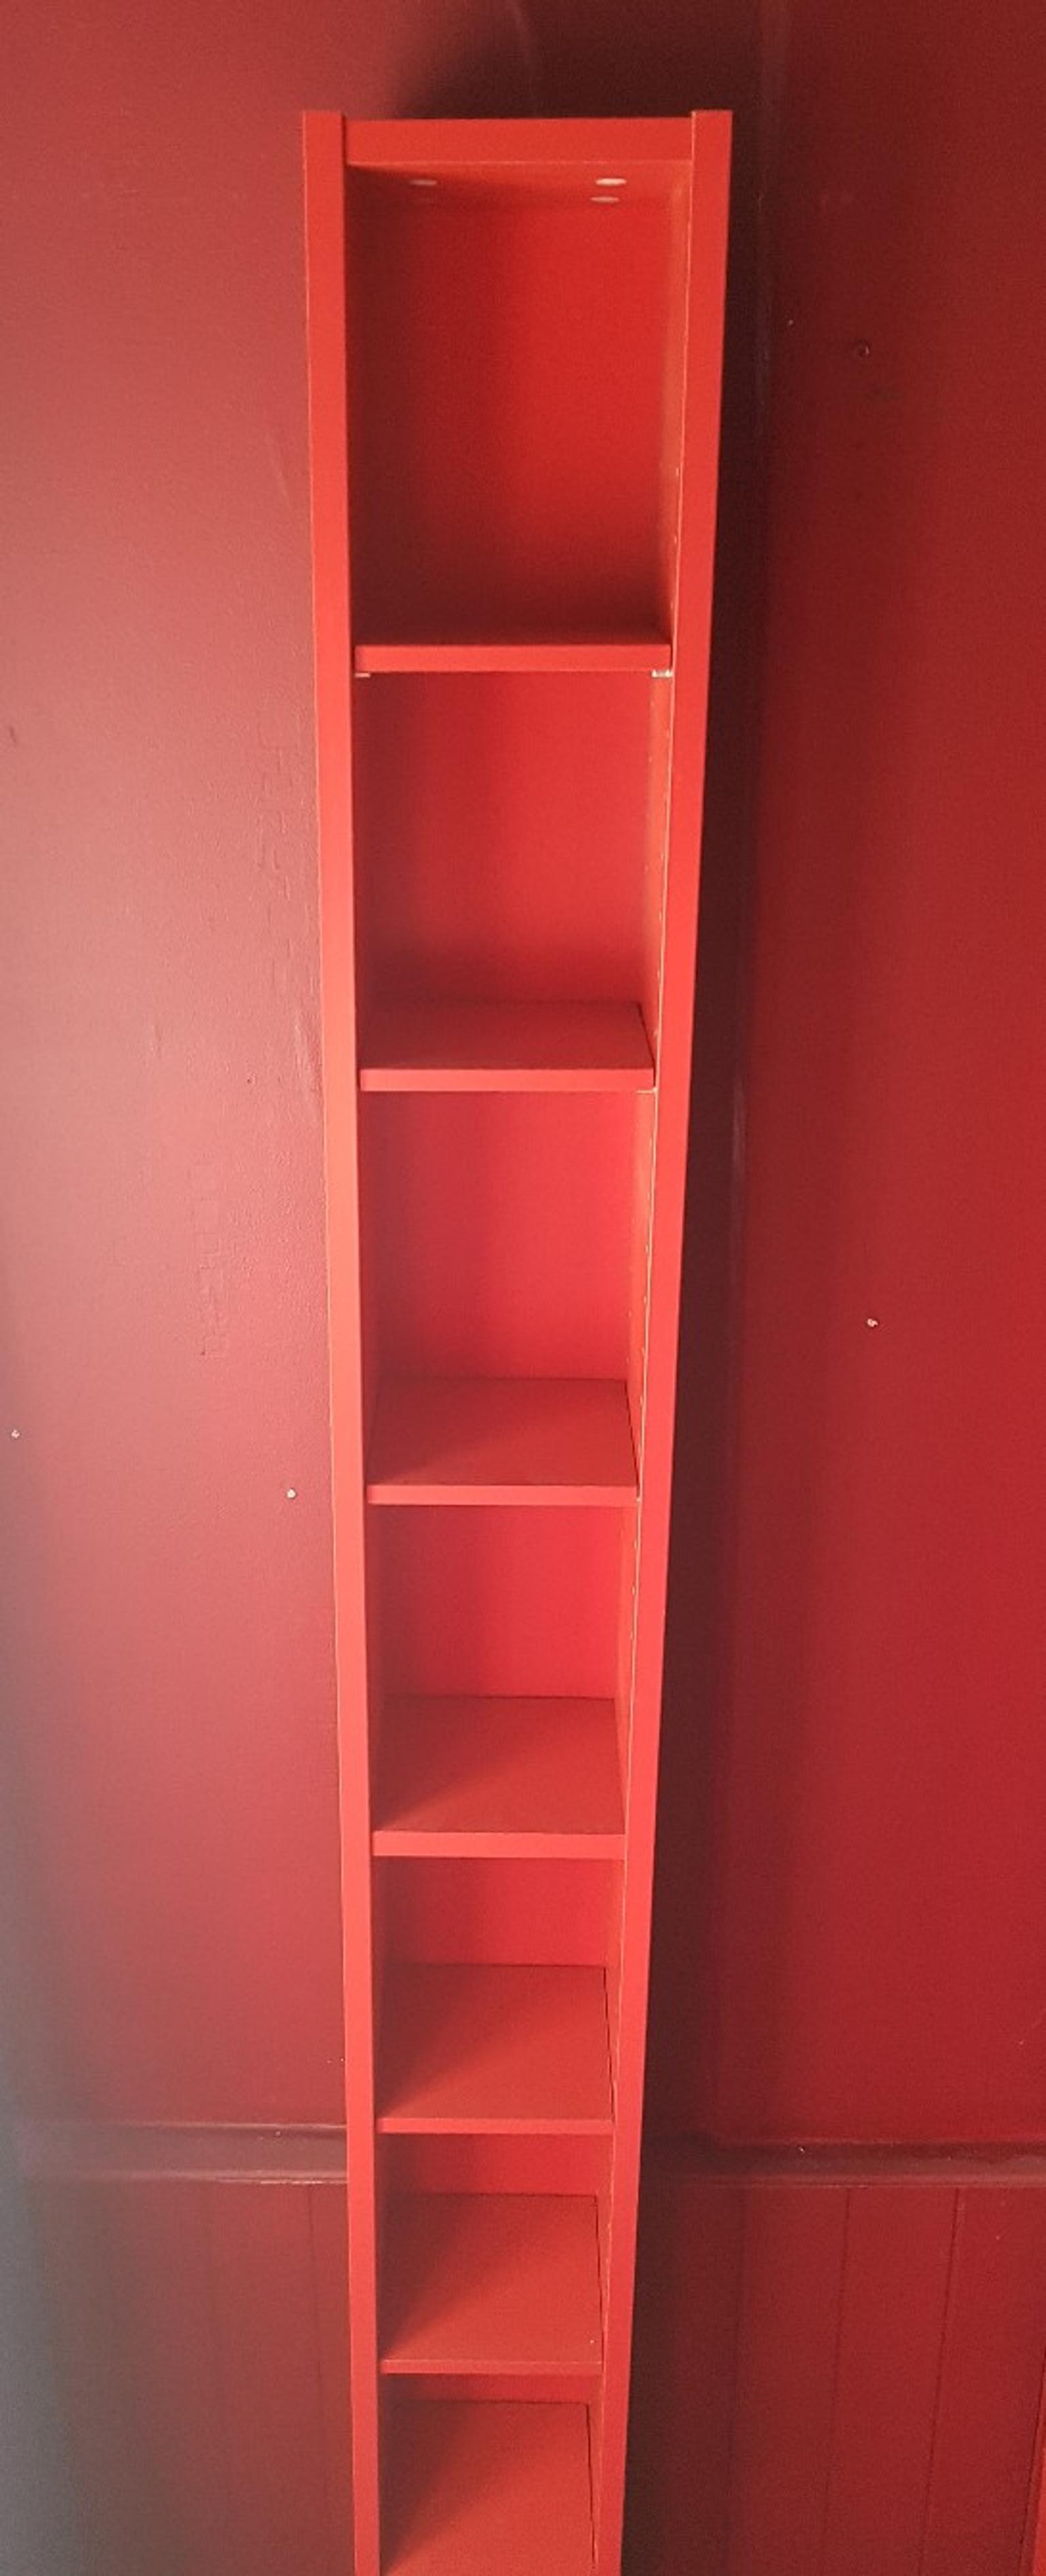 Ikea Red Cd Dvd Shelf Unit In Nw11 London Borough Of Barnet Fur 12